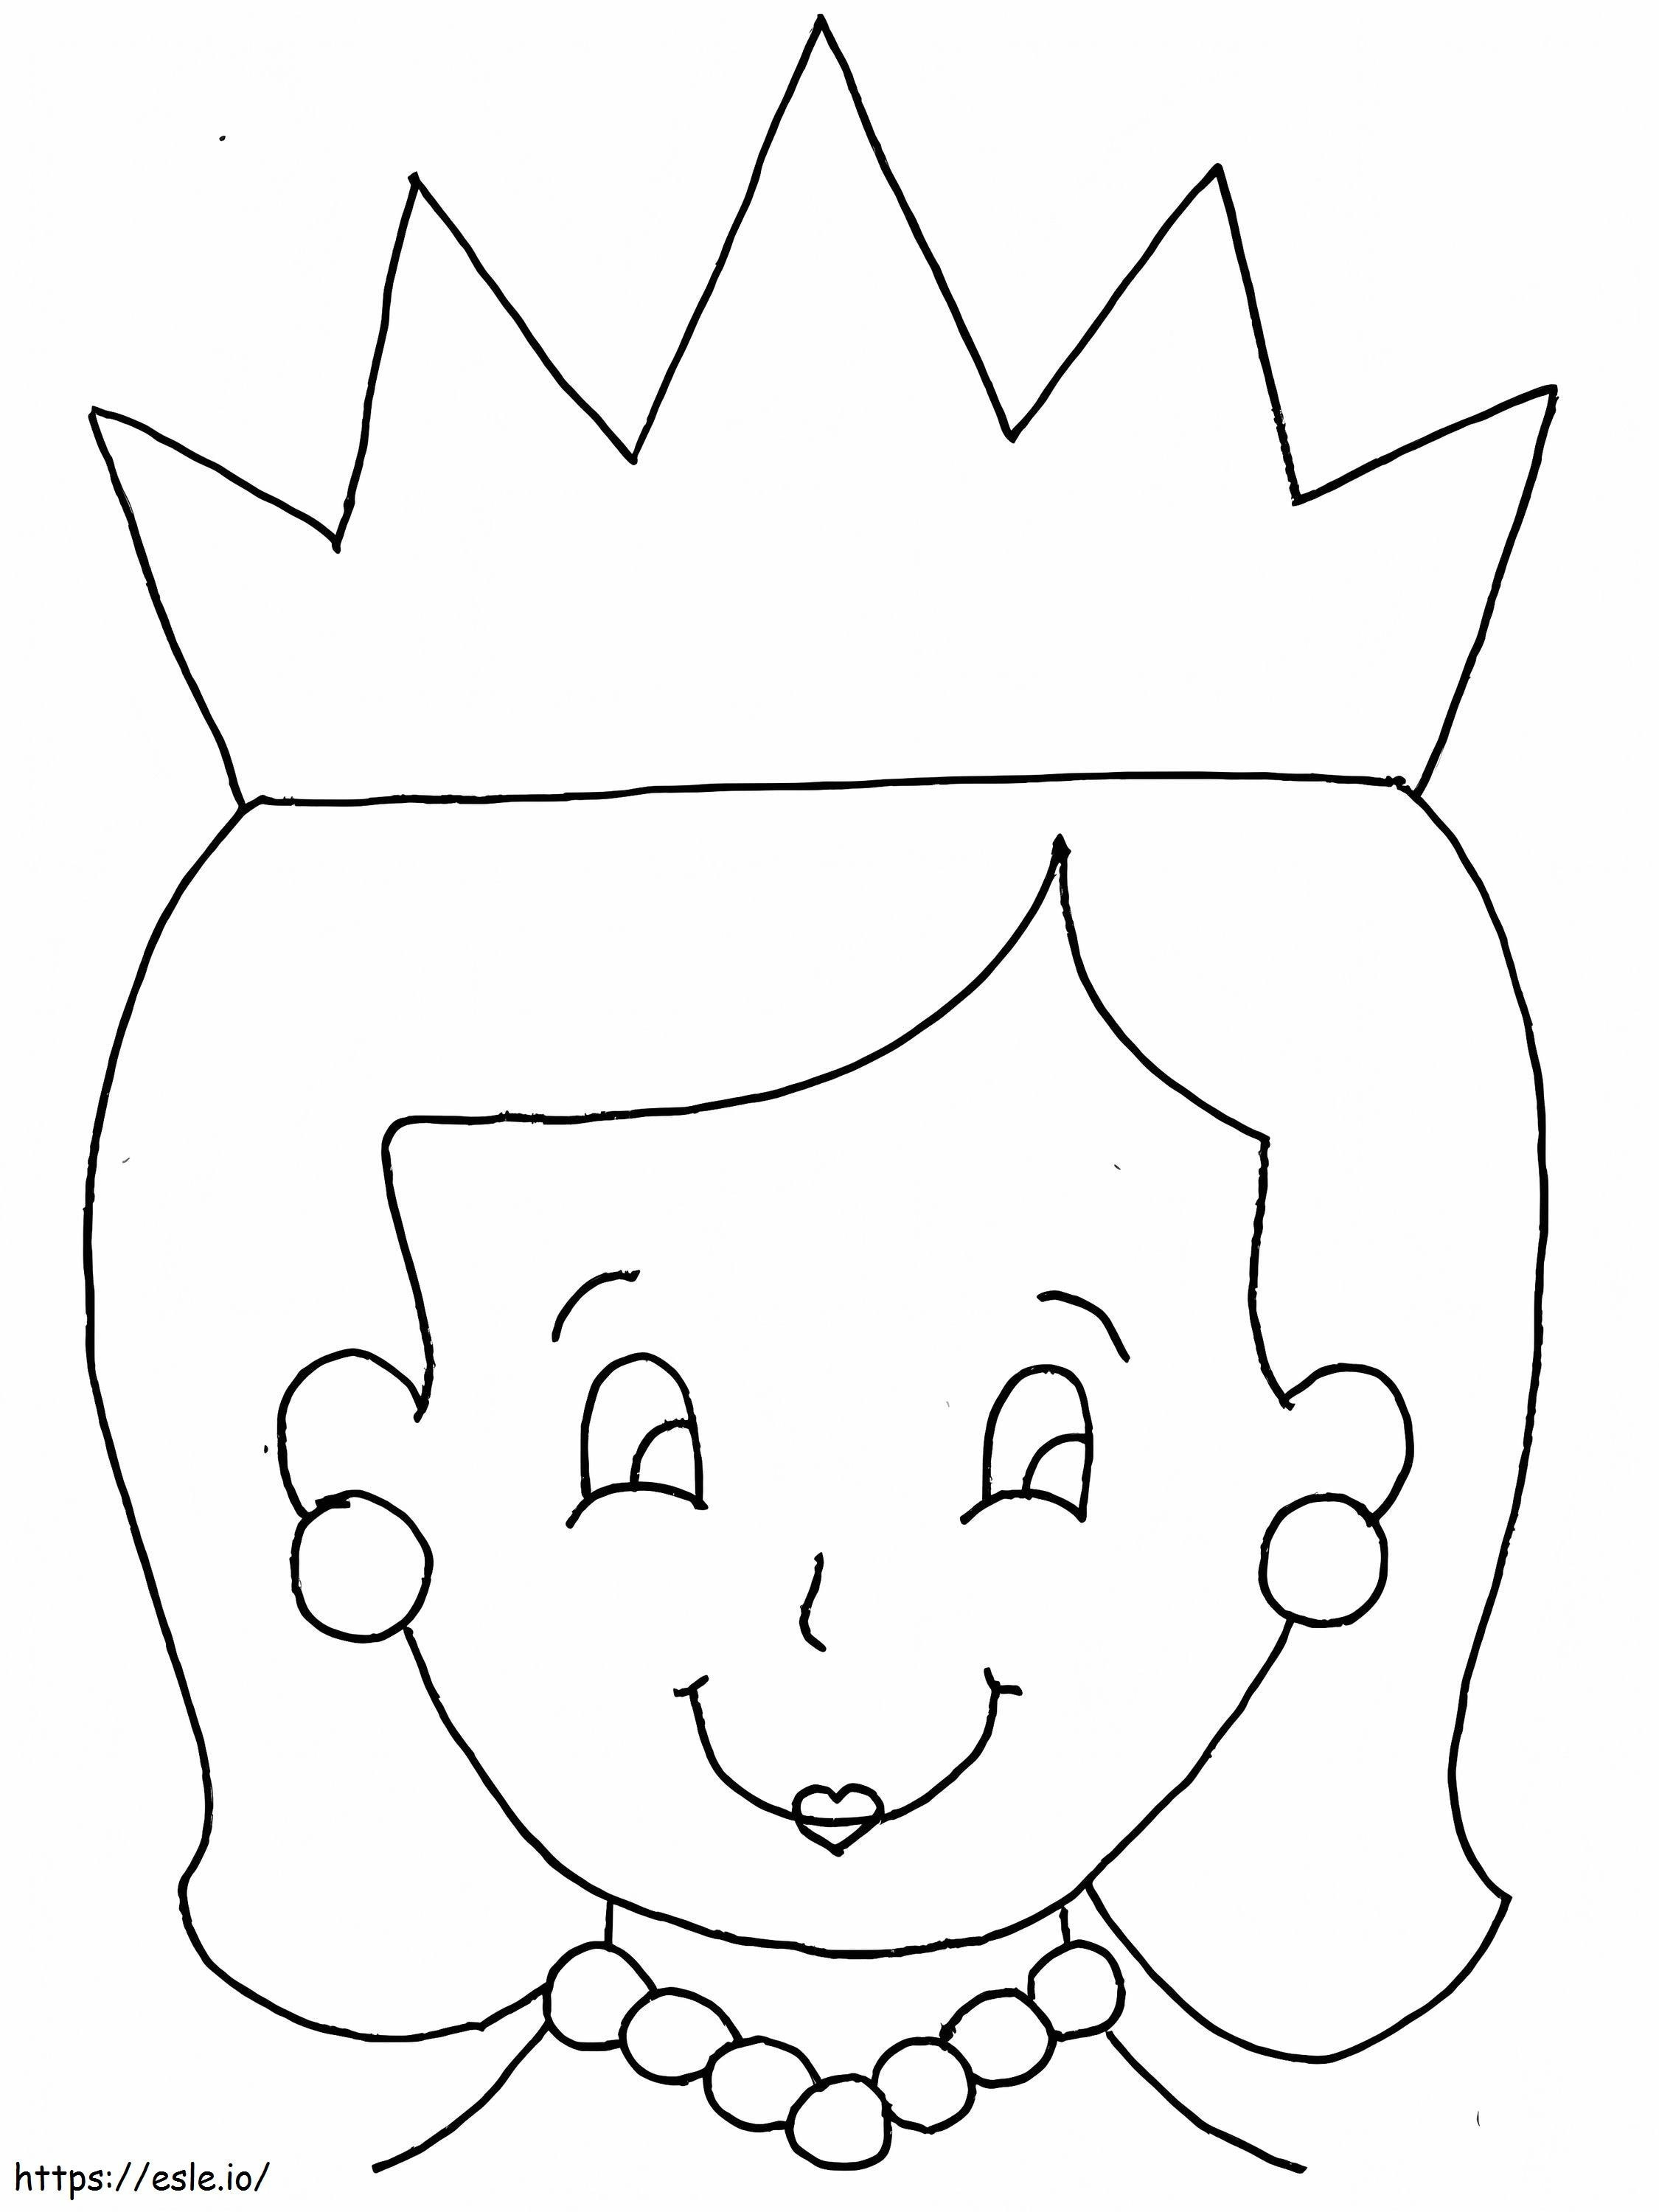 Happy Queen Face coloring page